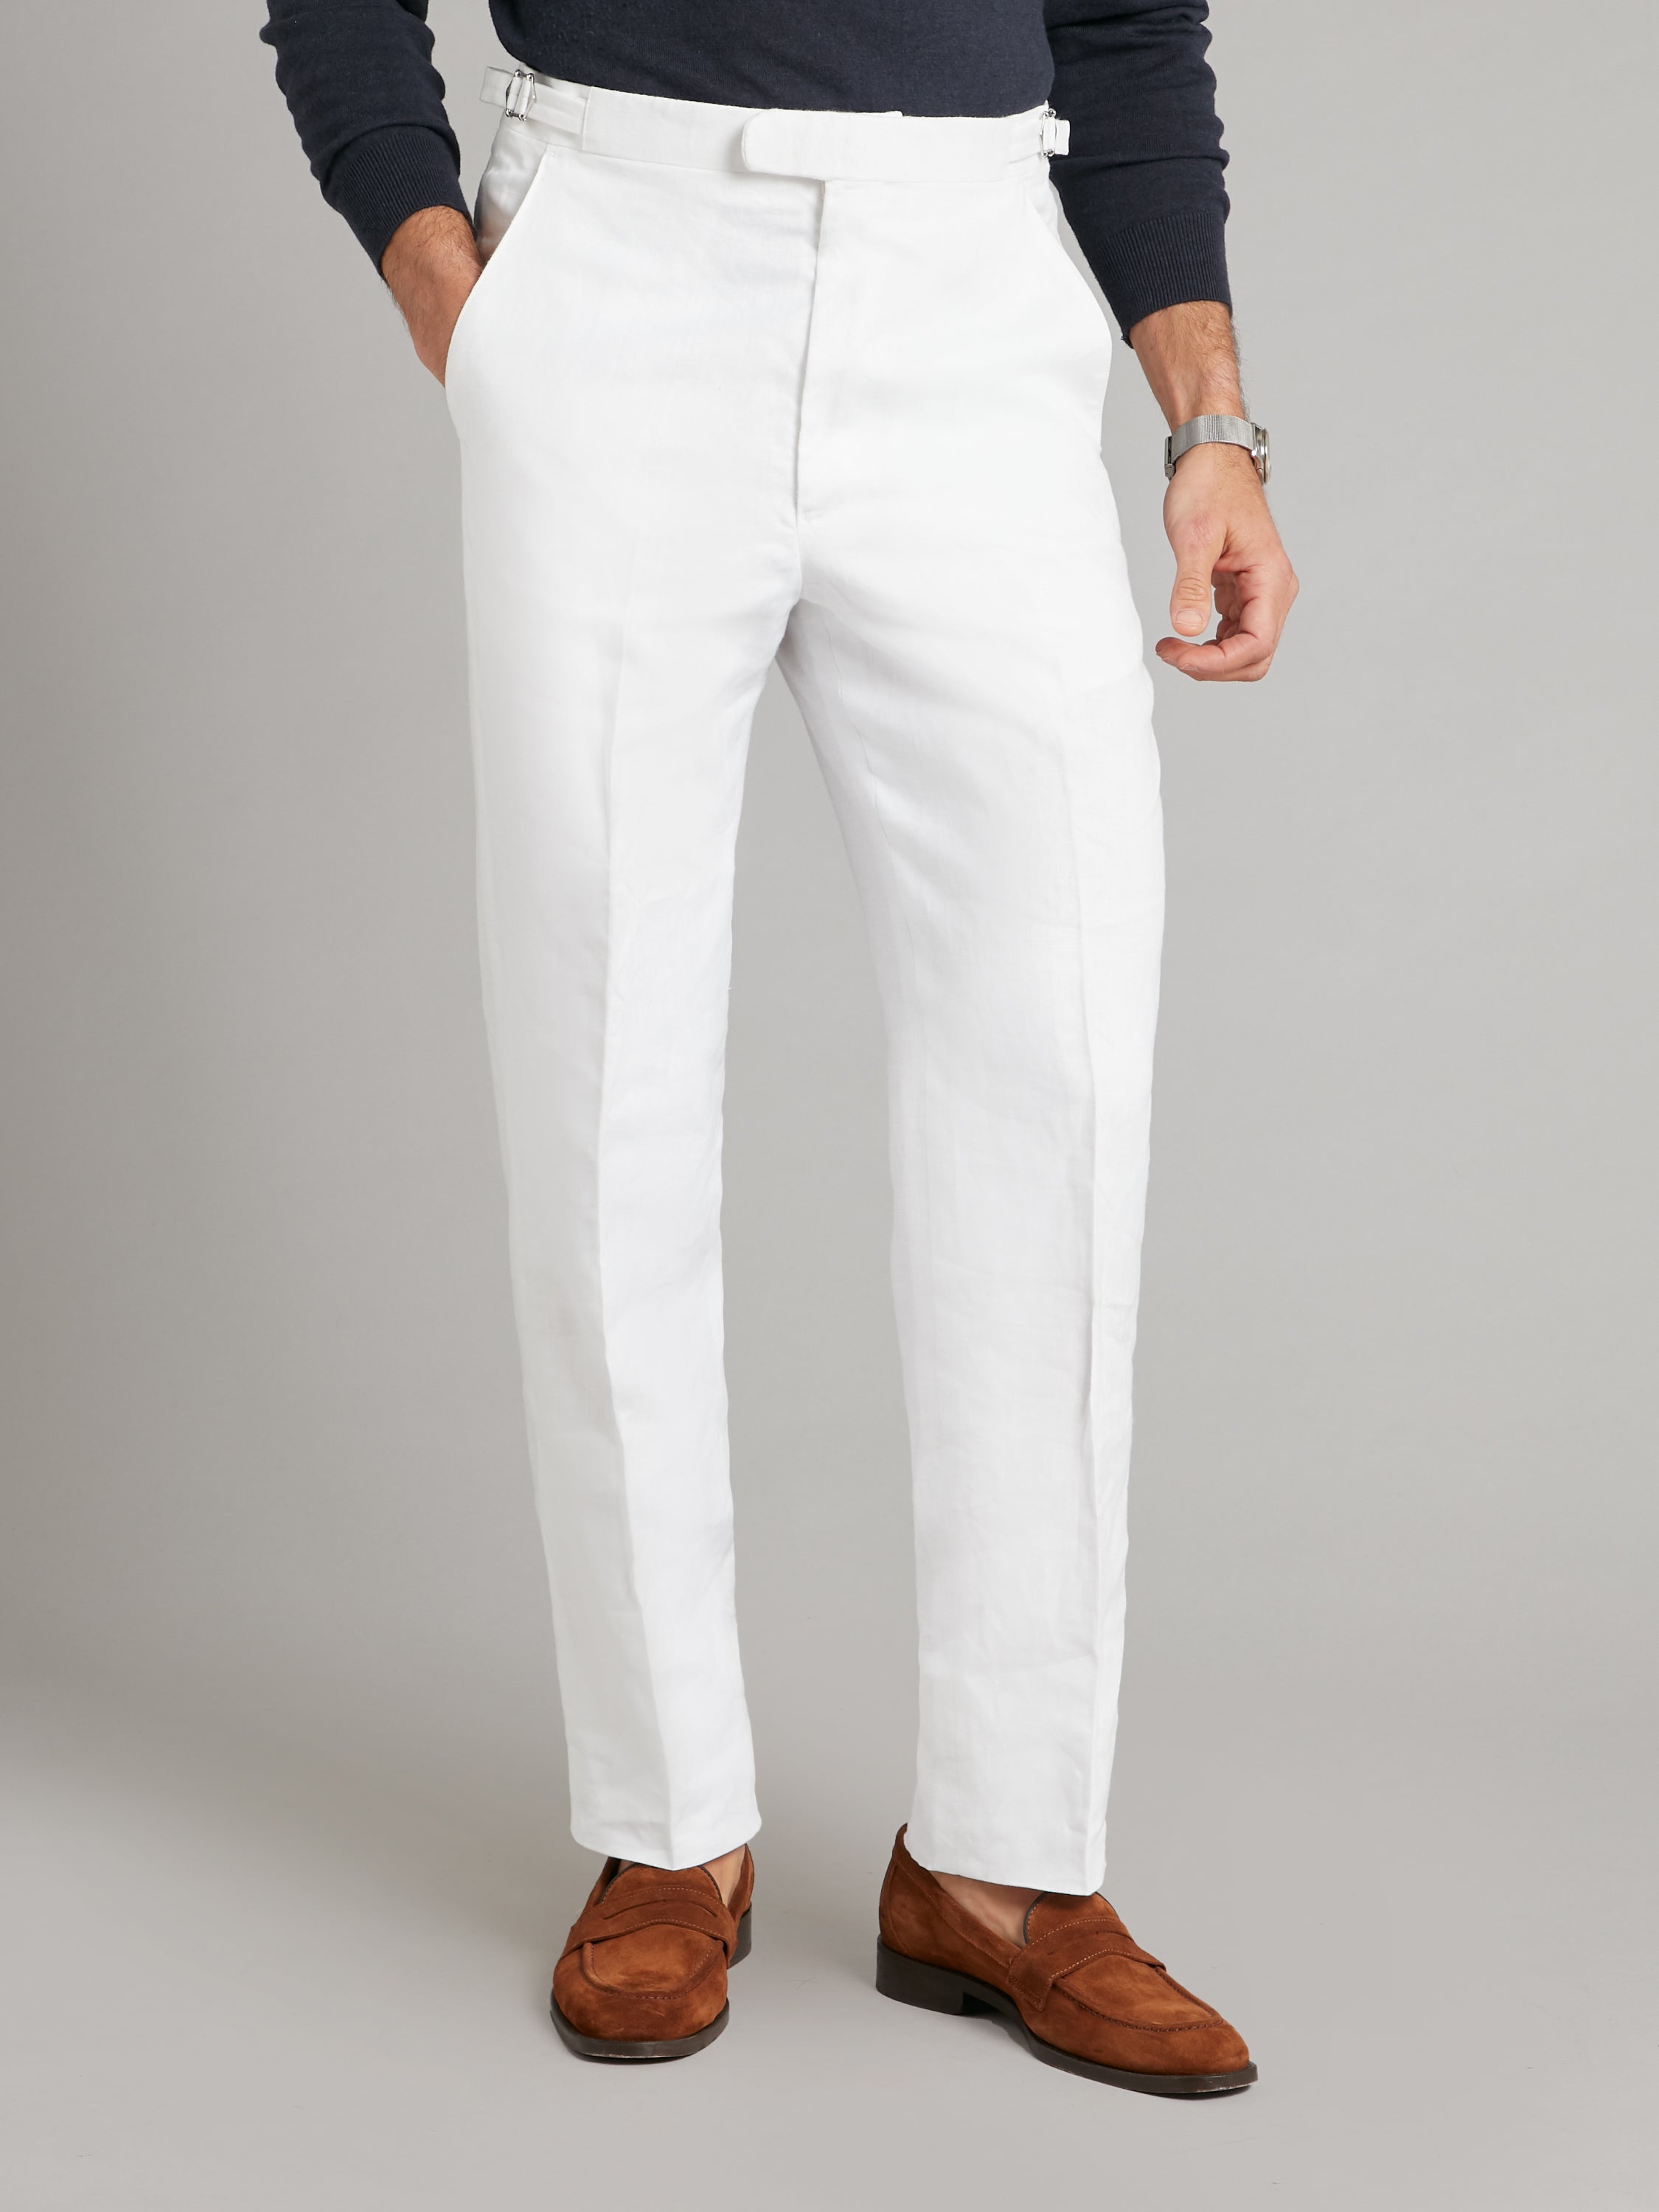 Anistyn High Waist Straight Leg Linen Trousers in White